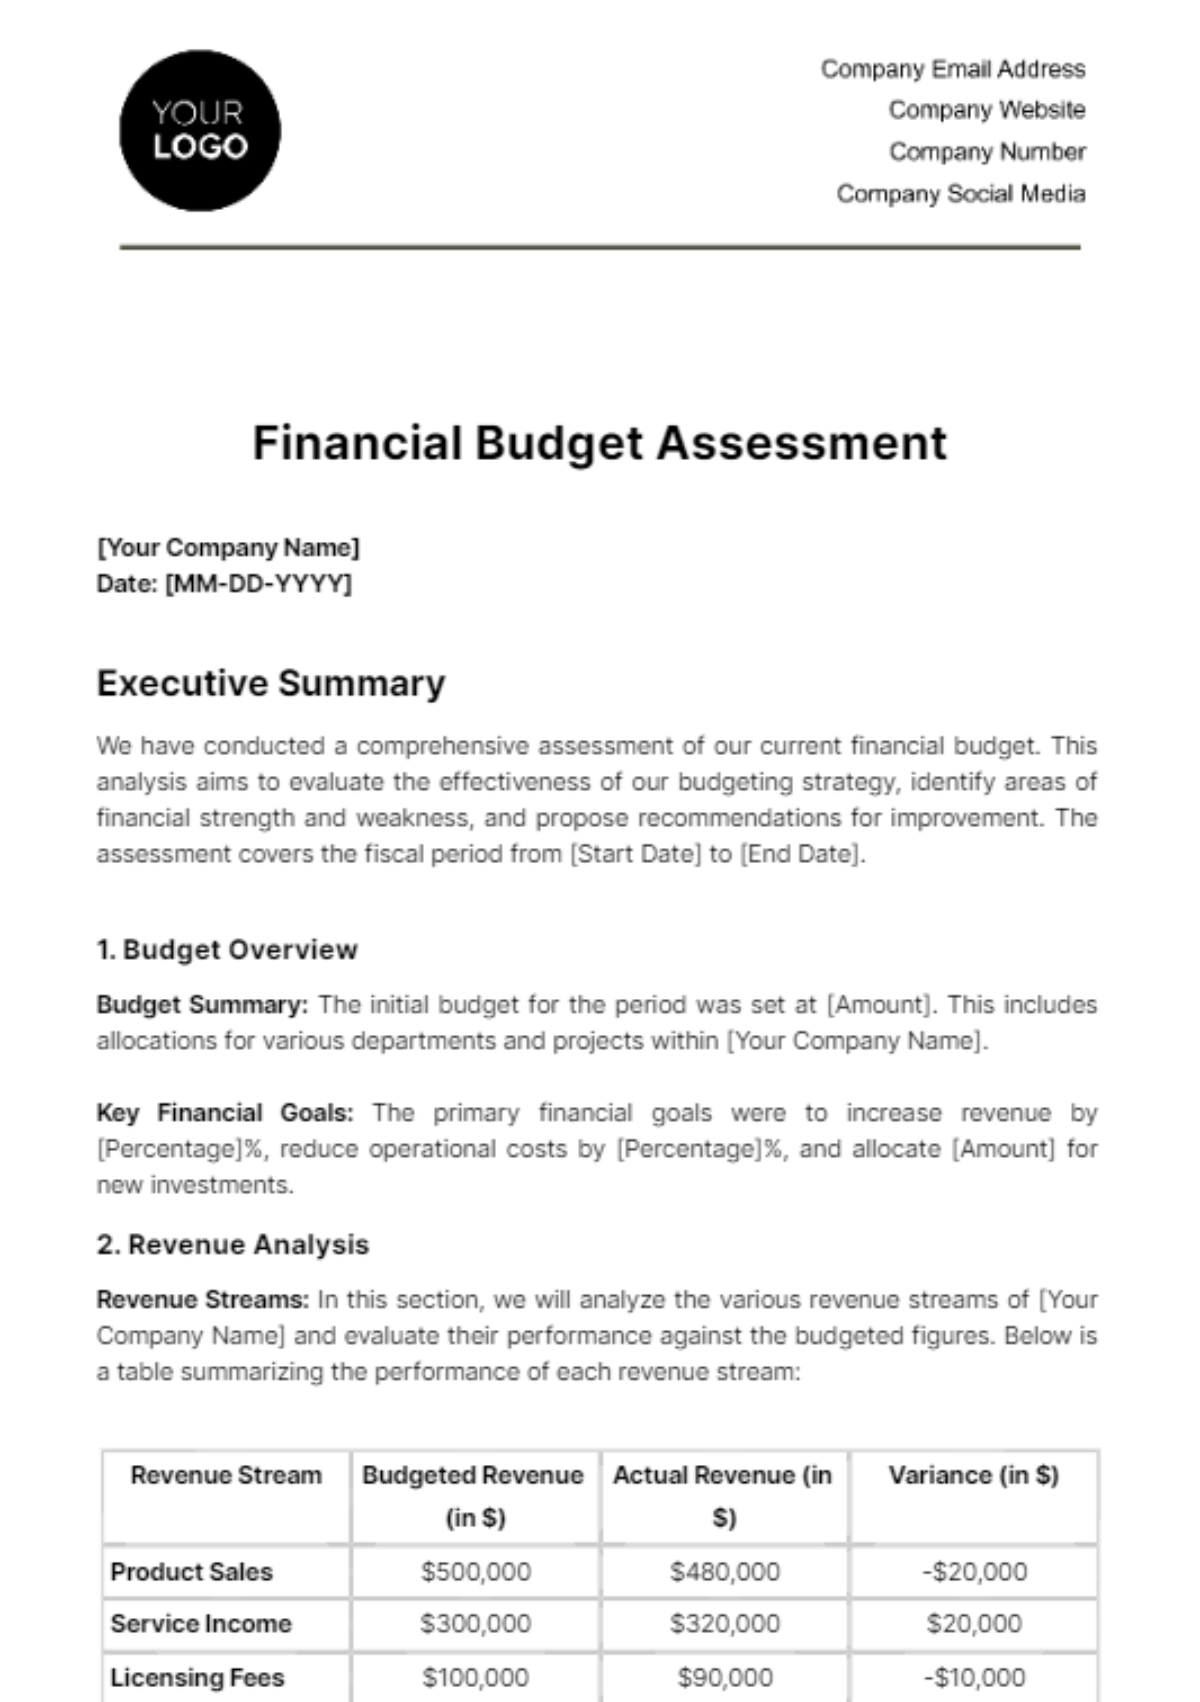 Free Financial Budget Assessment Template